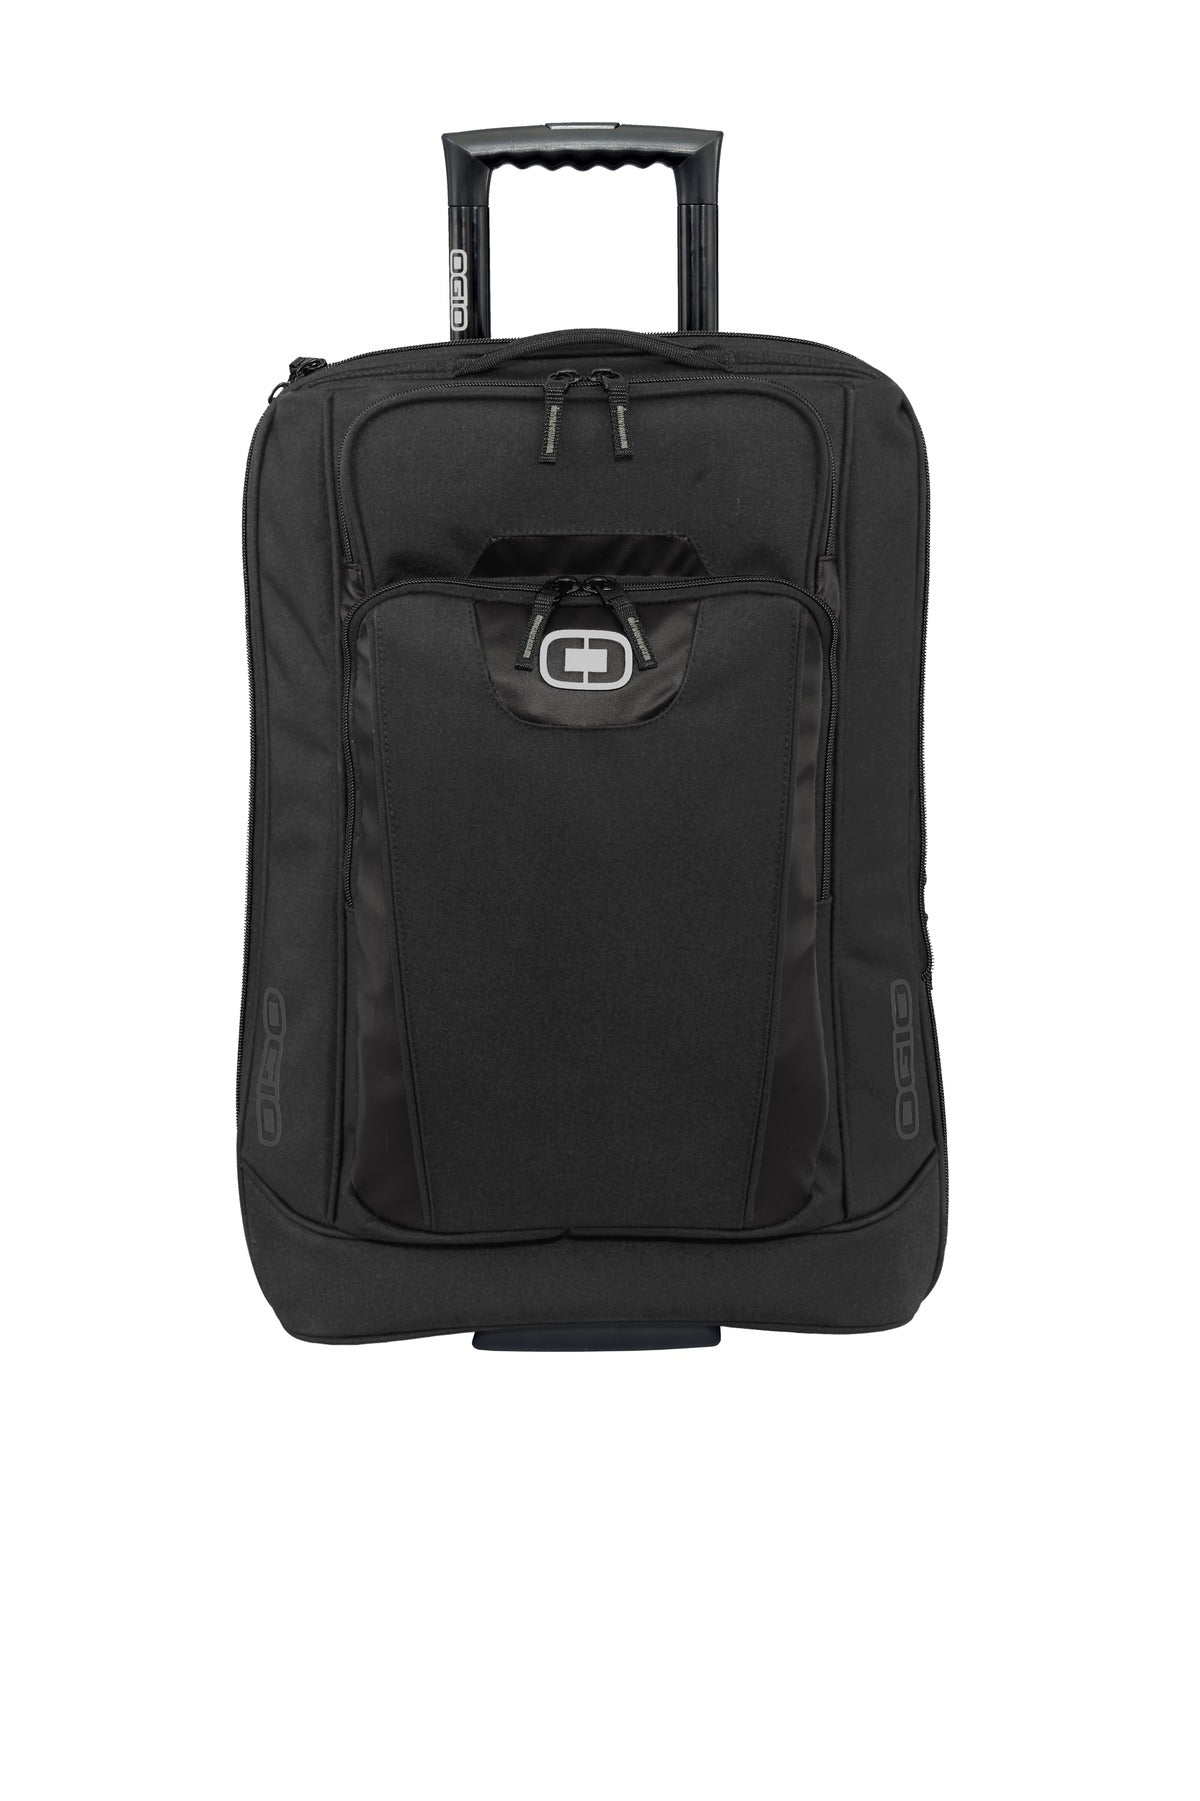 OGIO® Nomad 22 Travel Bag. 413018 - DFW Impression